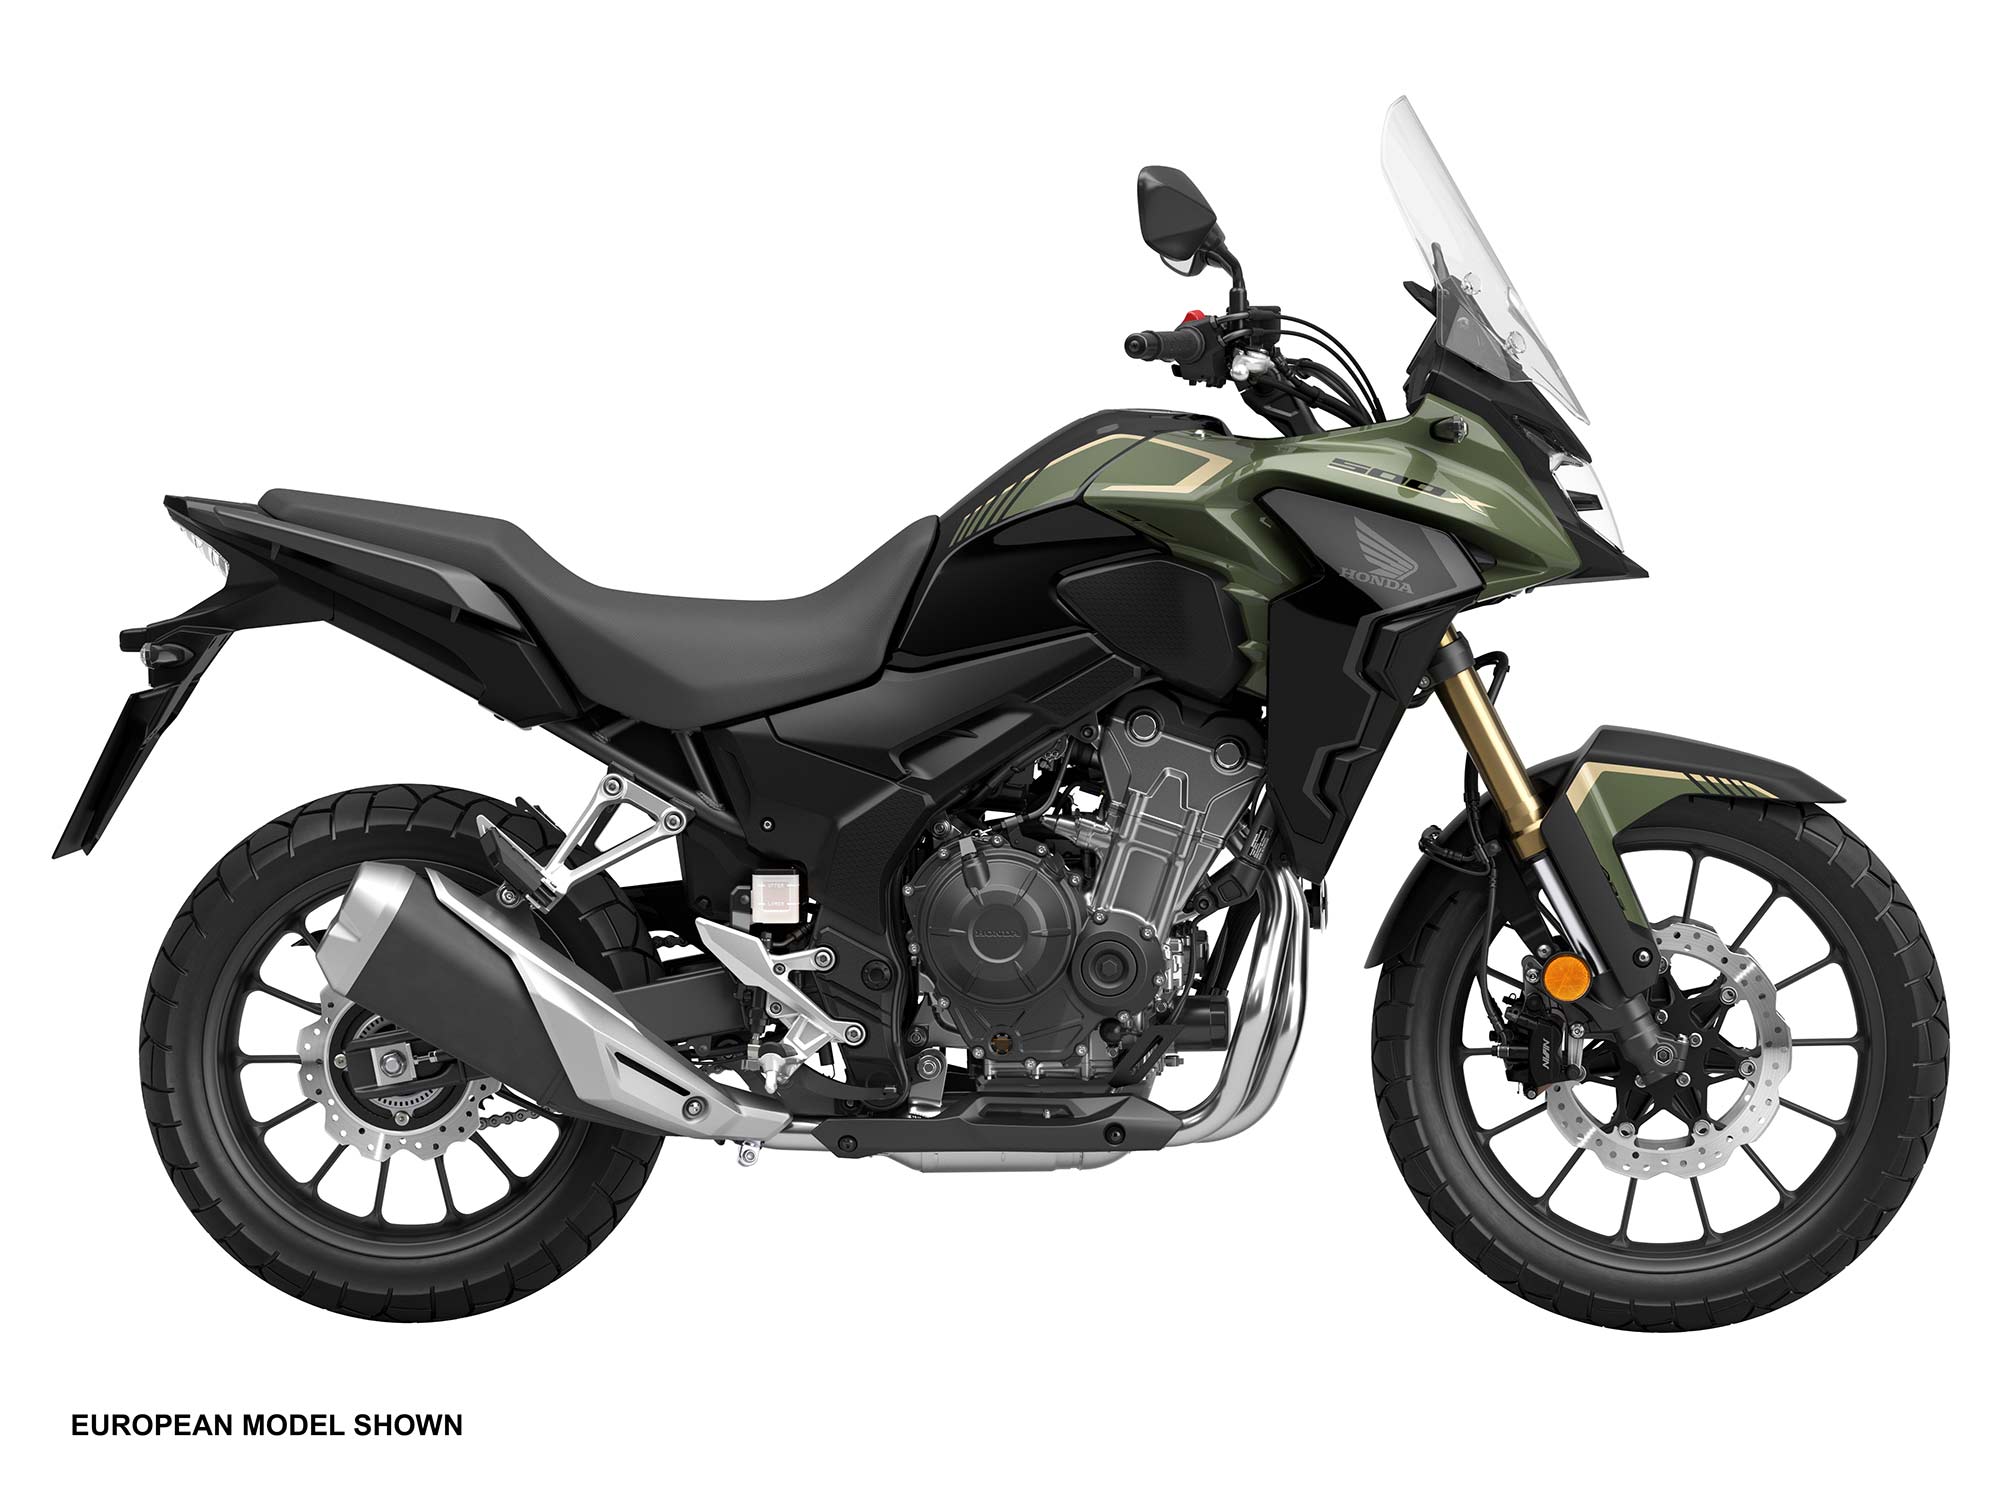 Honda cuts CB500X's price by Rs 1 lakh